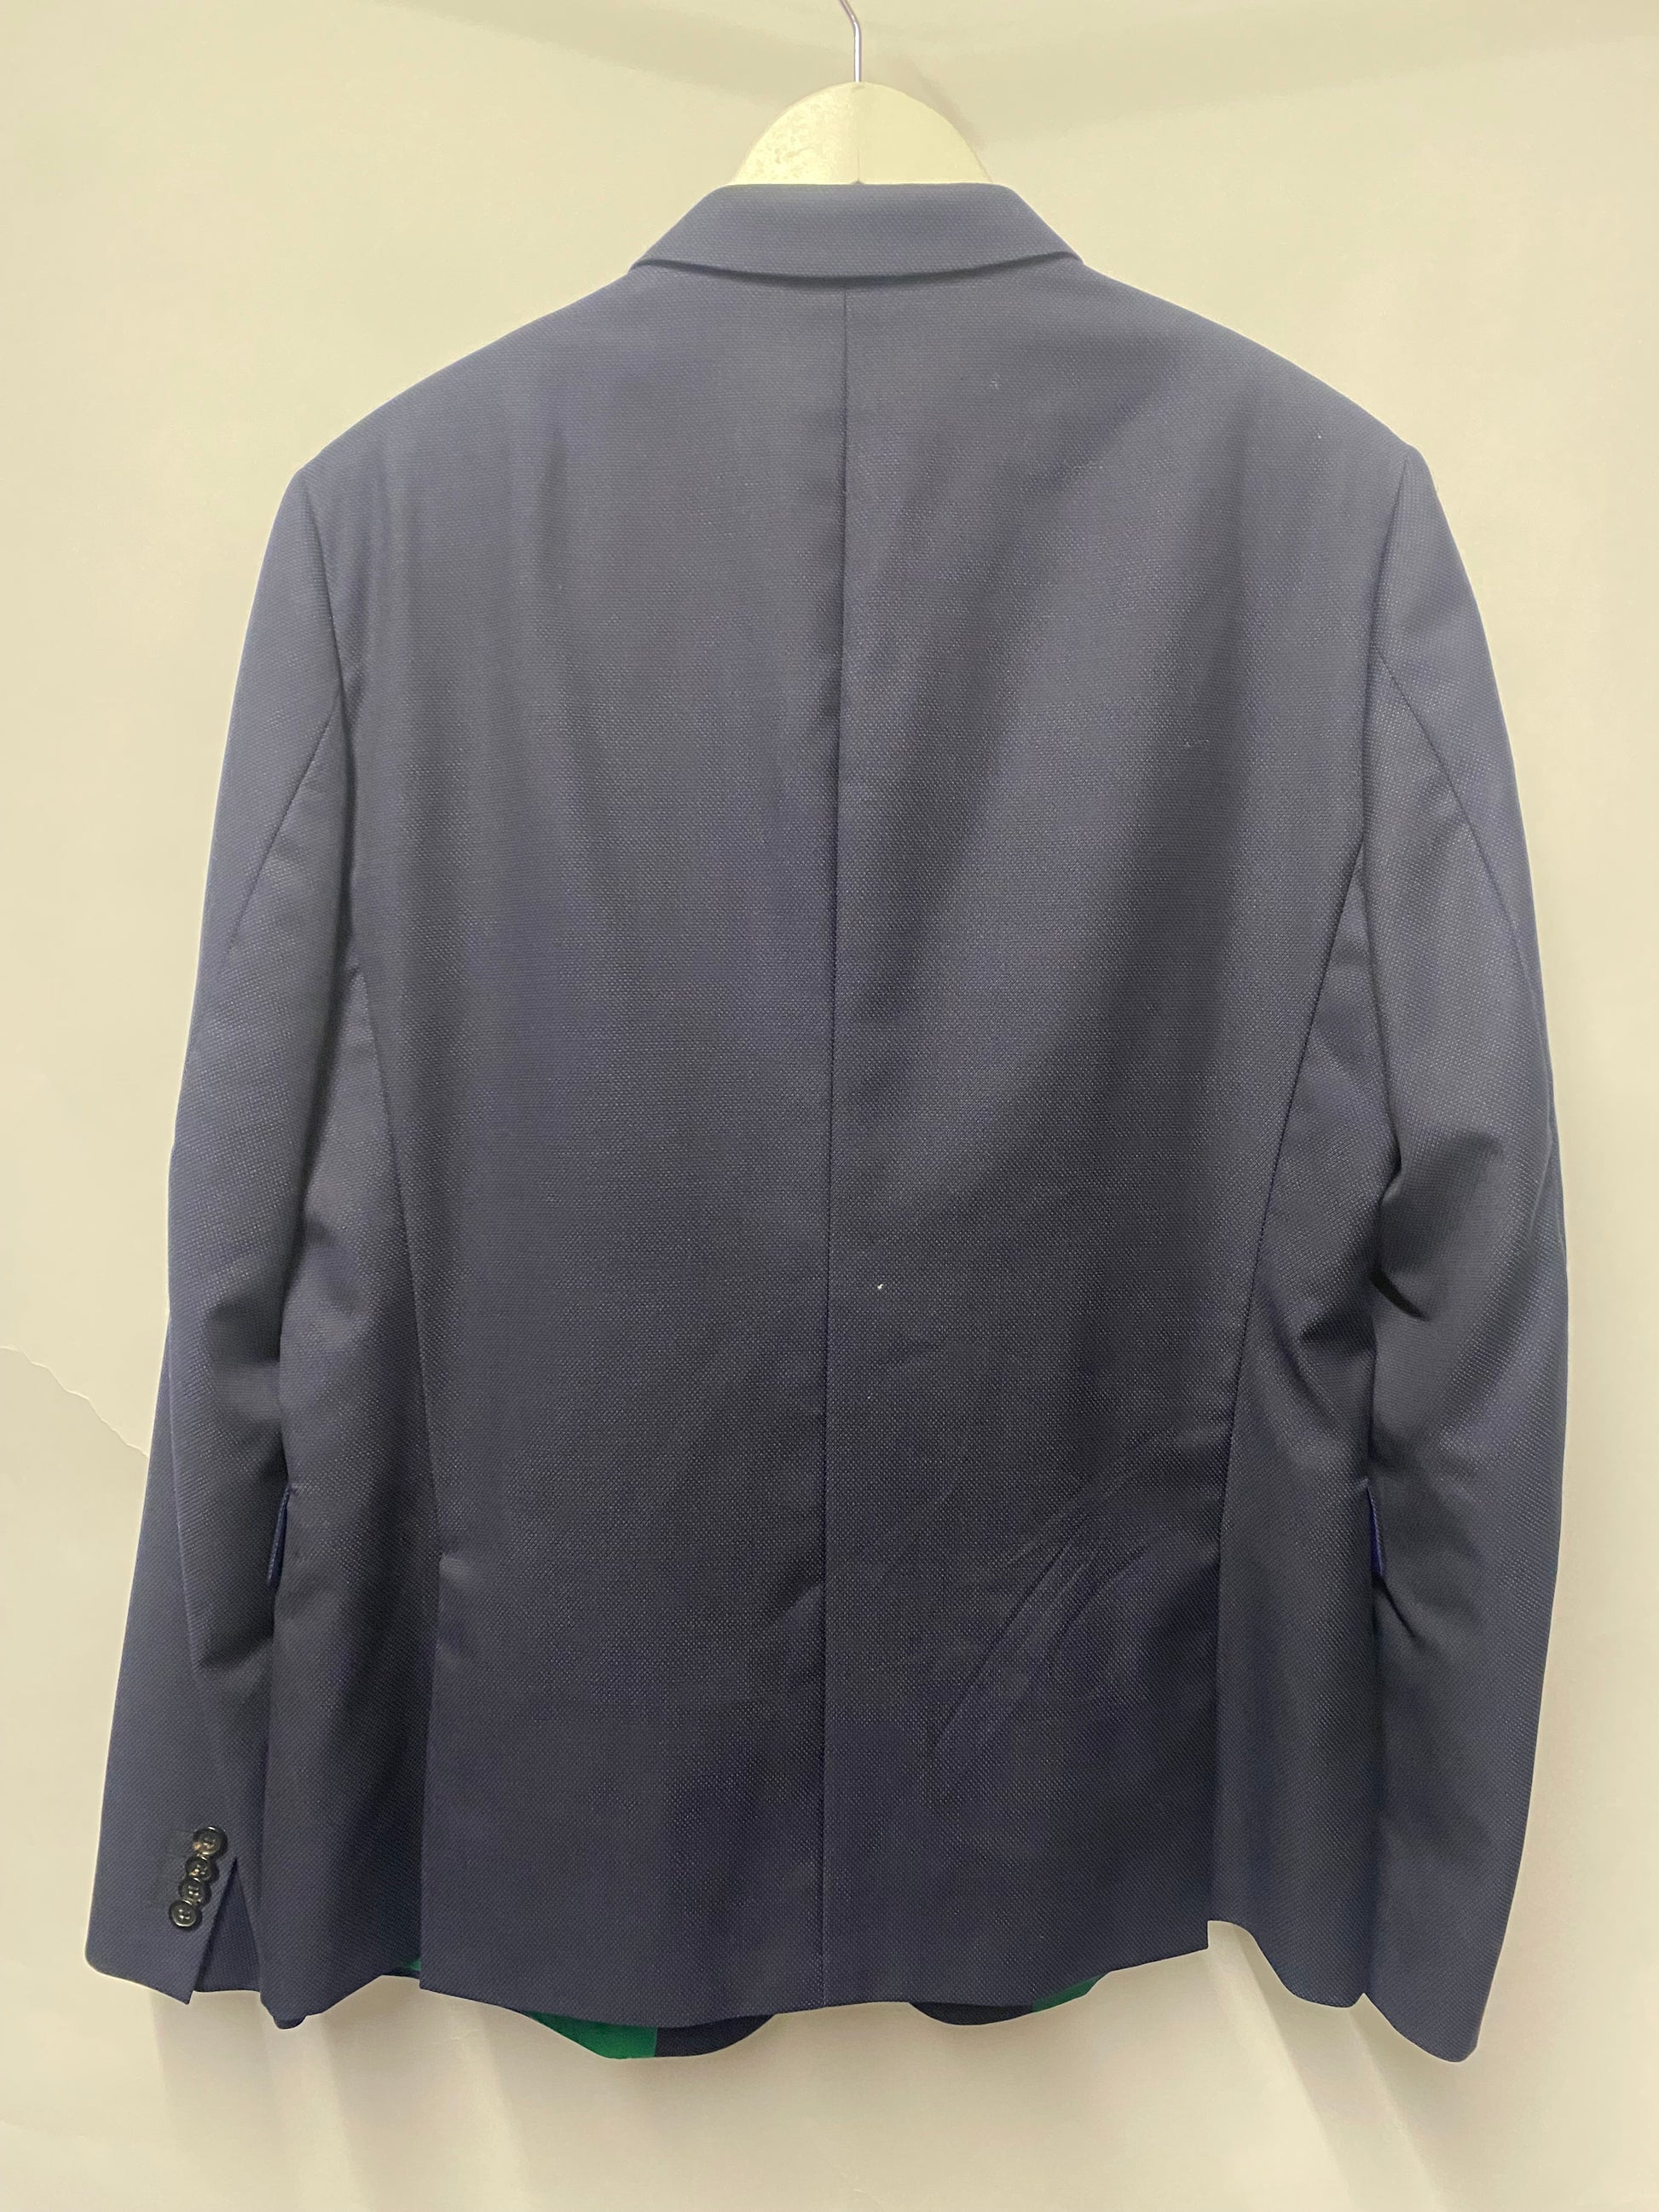 Linea Uomo Men's Suit Jacket Size 38 Long, Navy Blue 100% Wool Blazer Coat